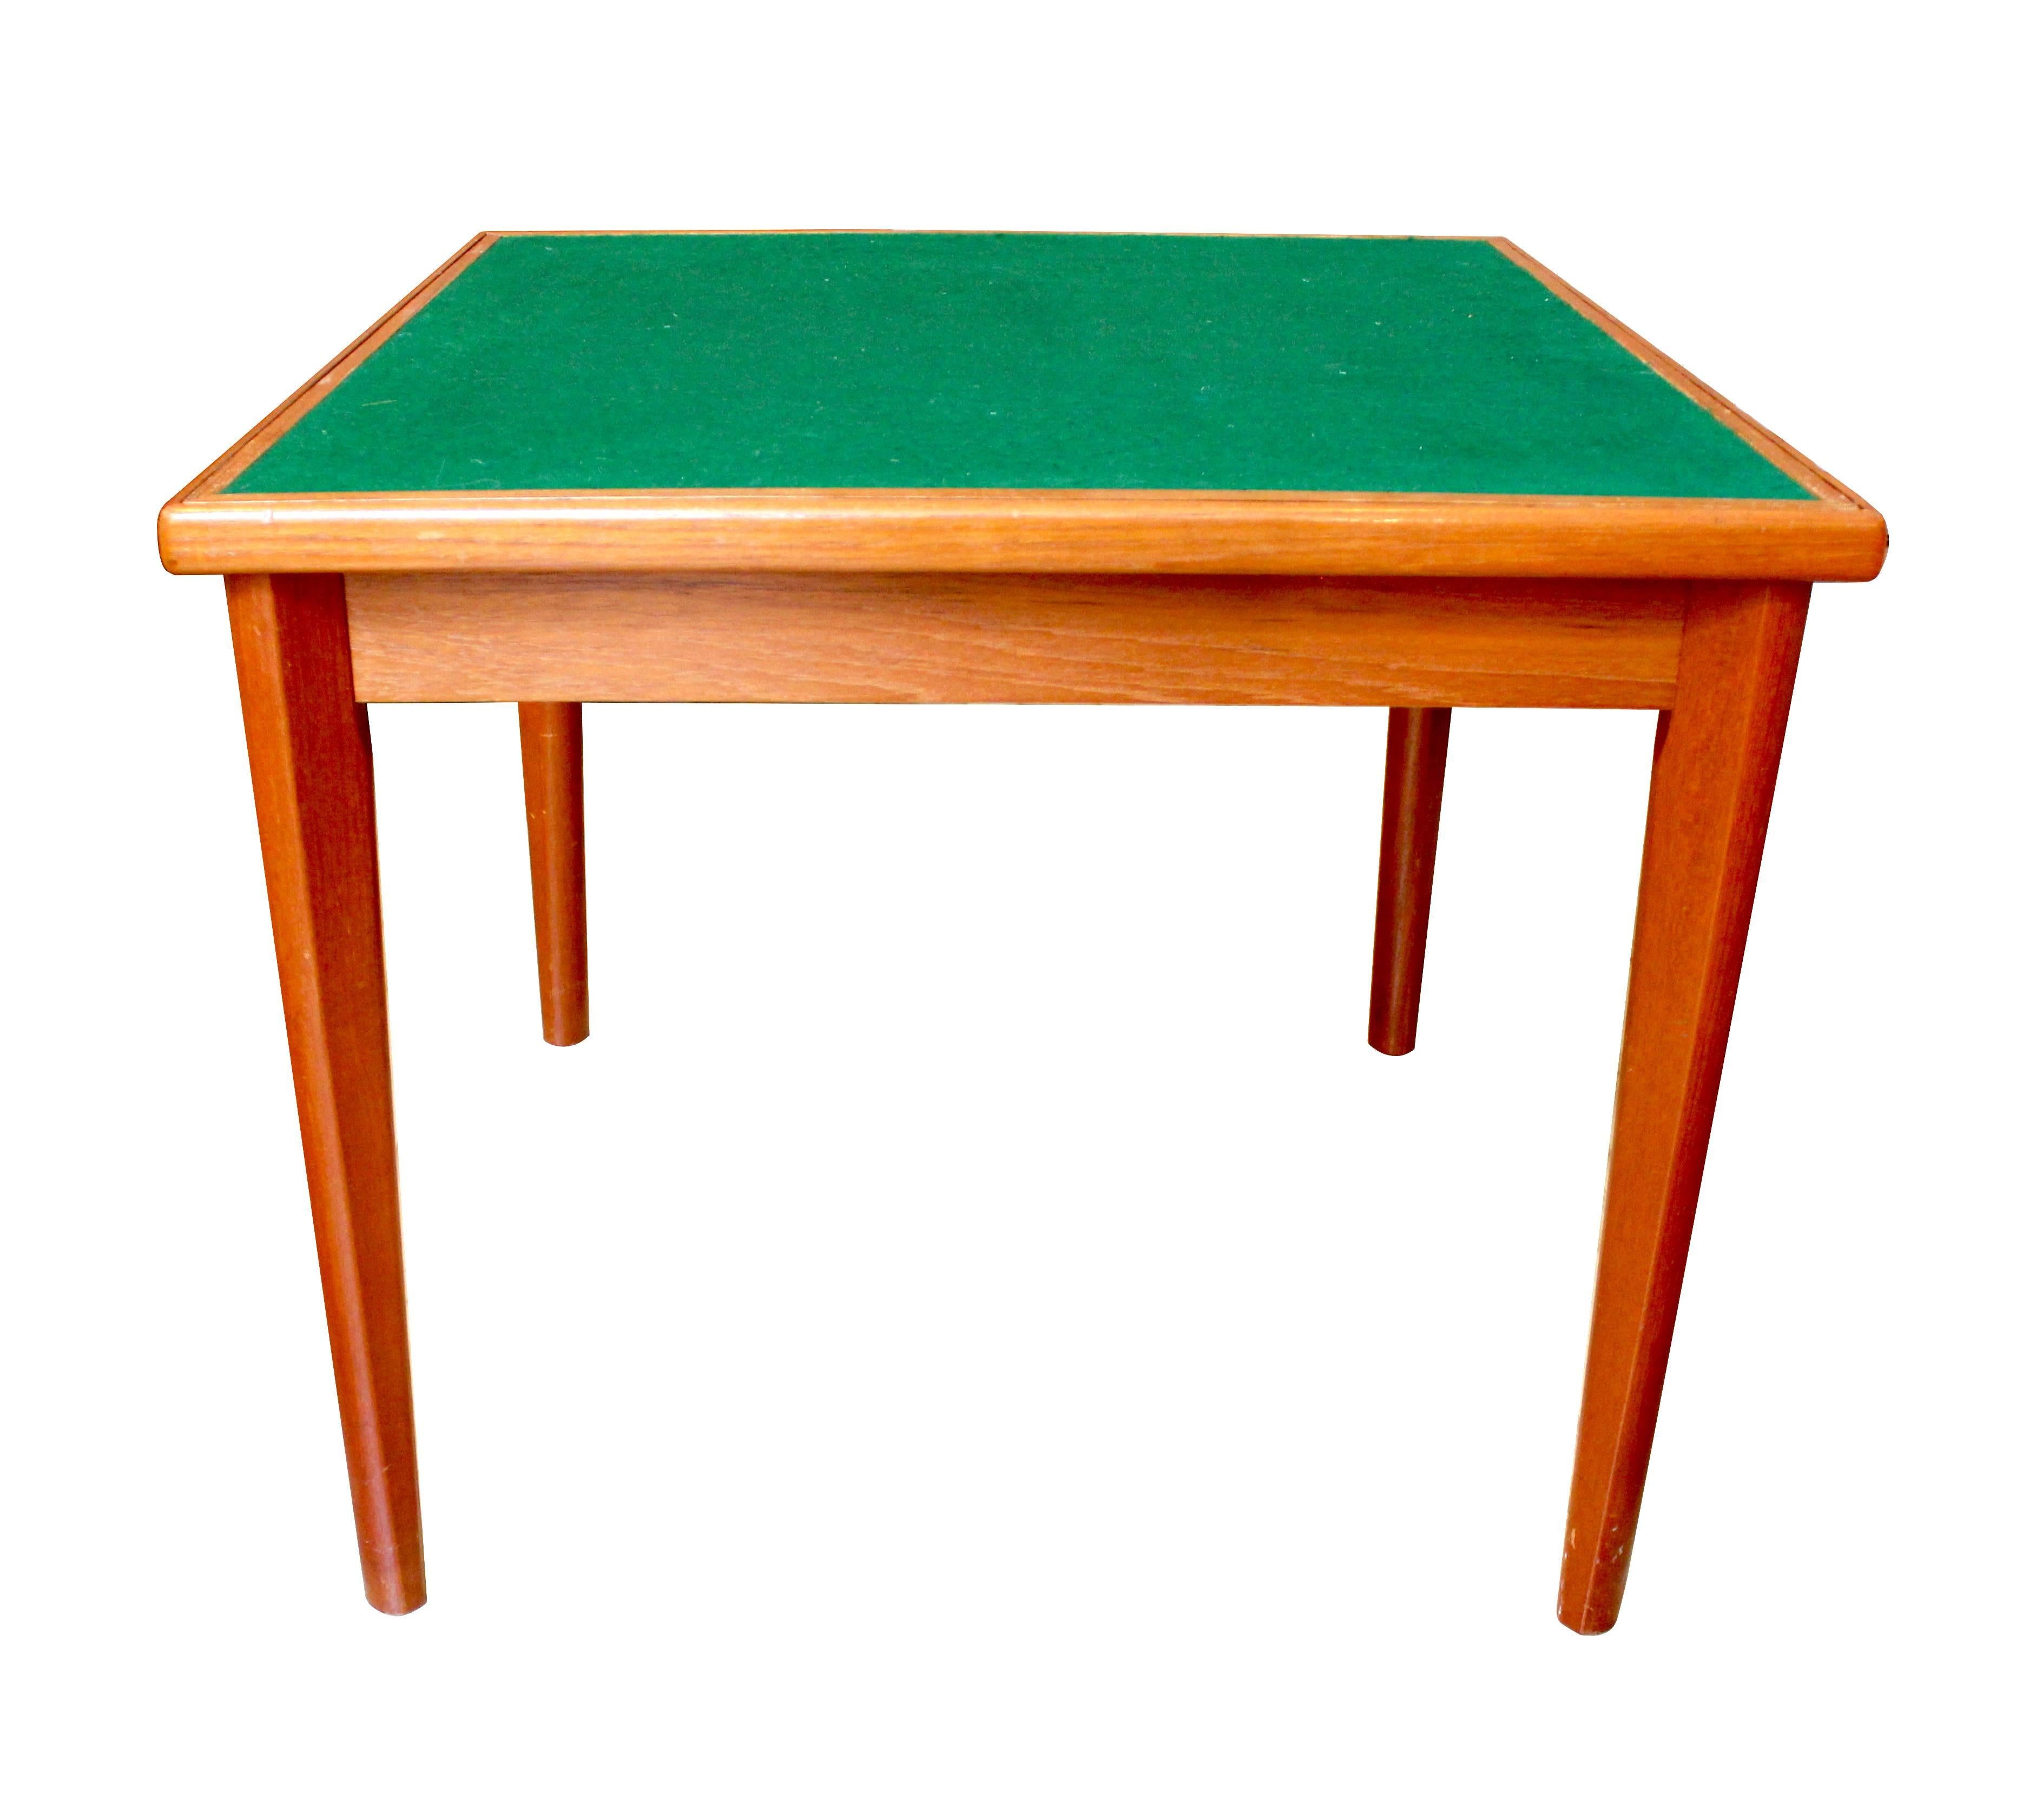 Felt 1960s Danish Modern Teak Game Table with Reversible Top by Furbo